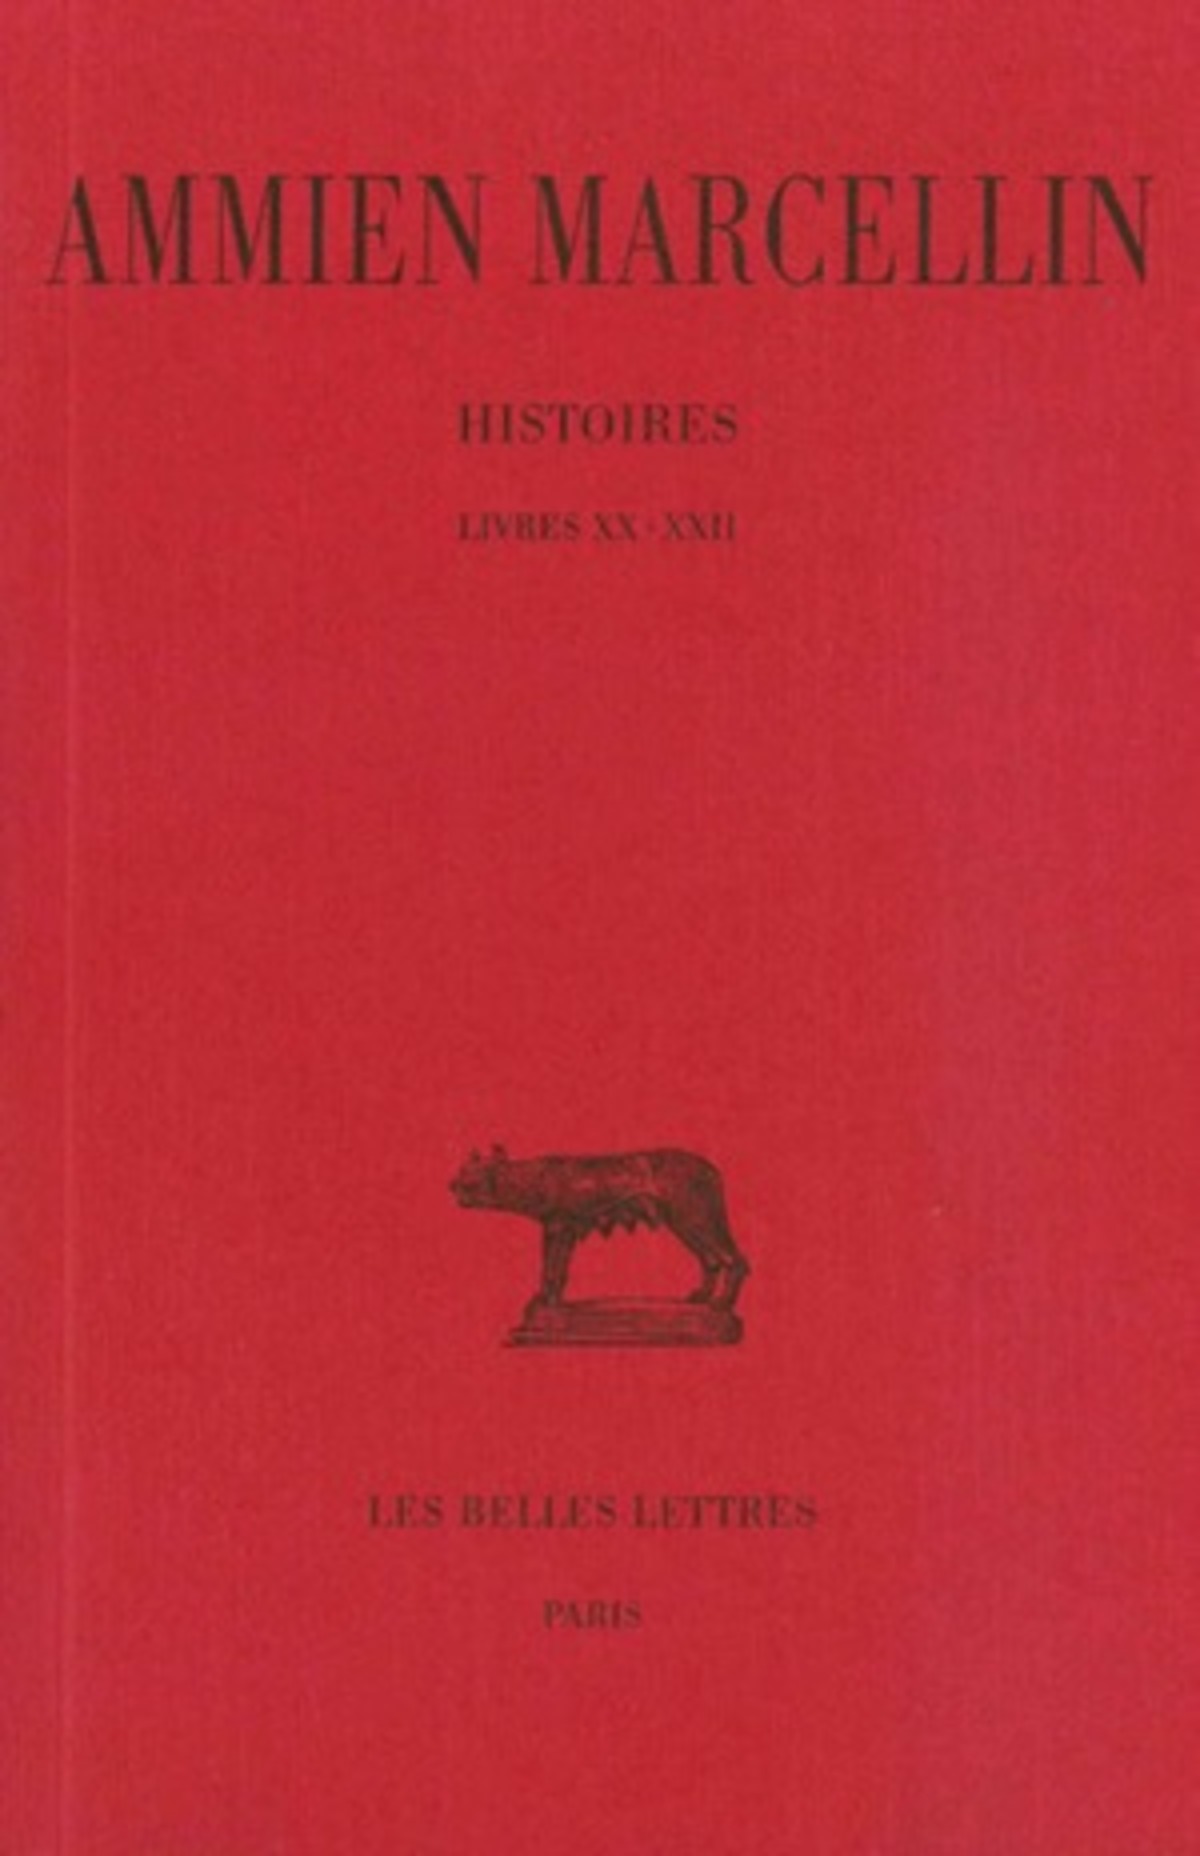 Histoires. Tome III : Livres XX-XXII